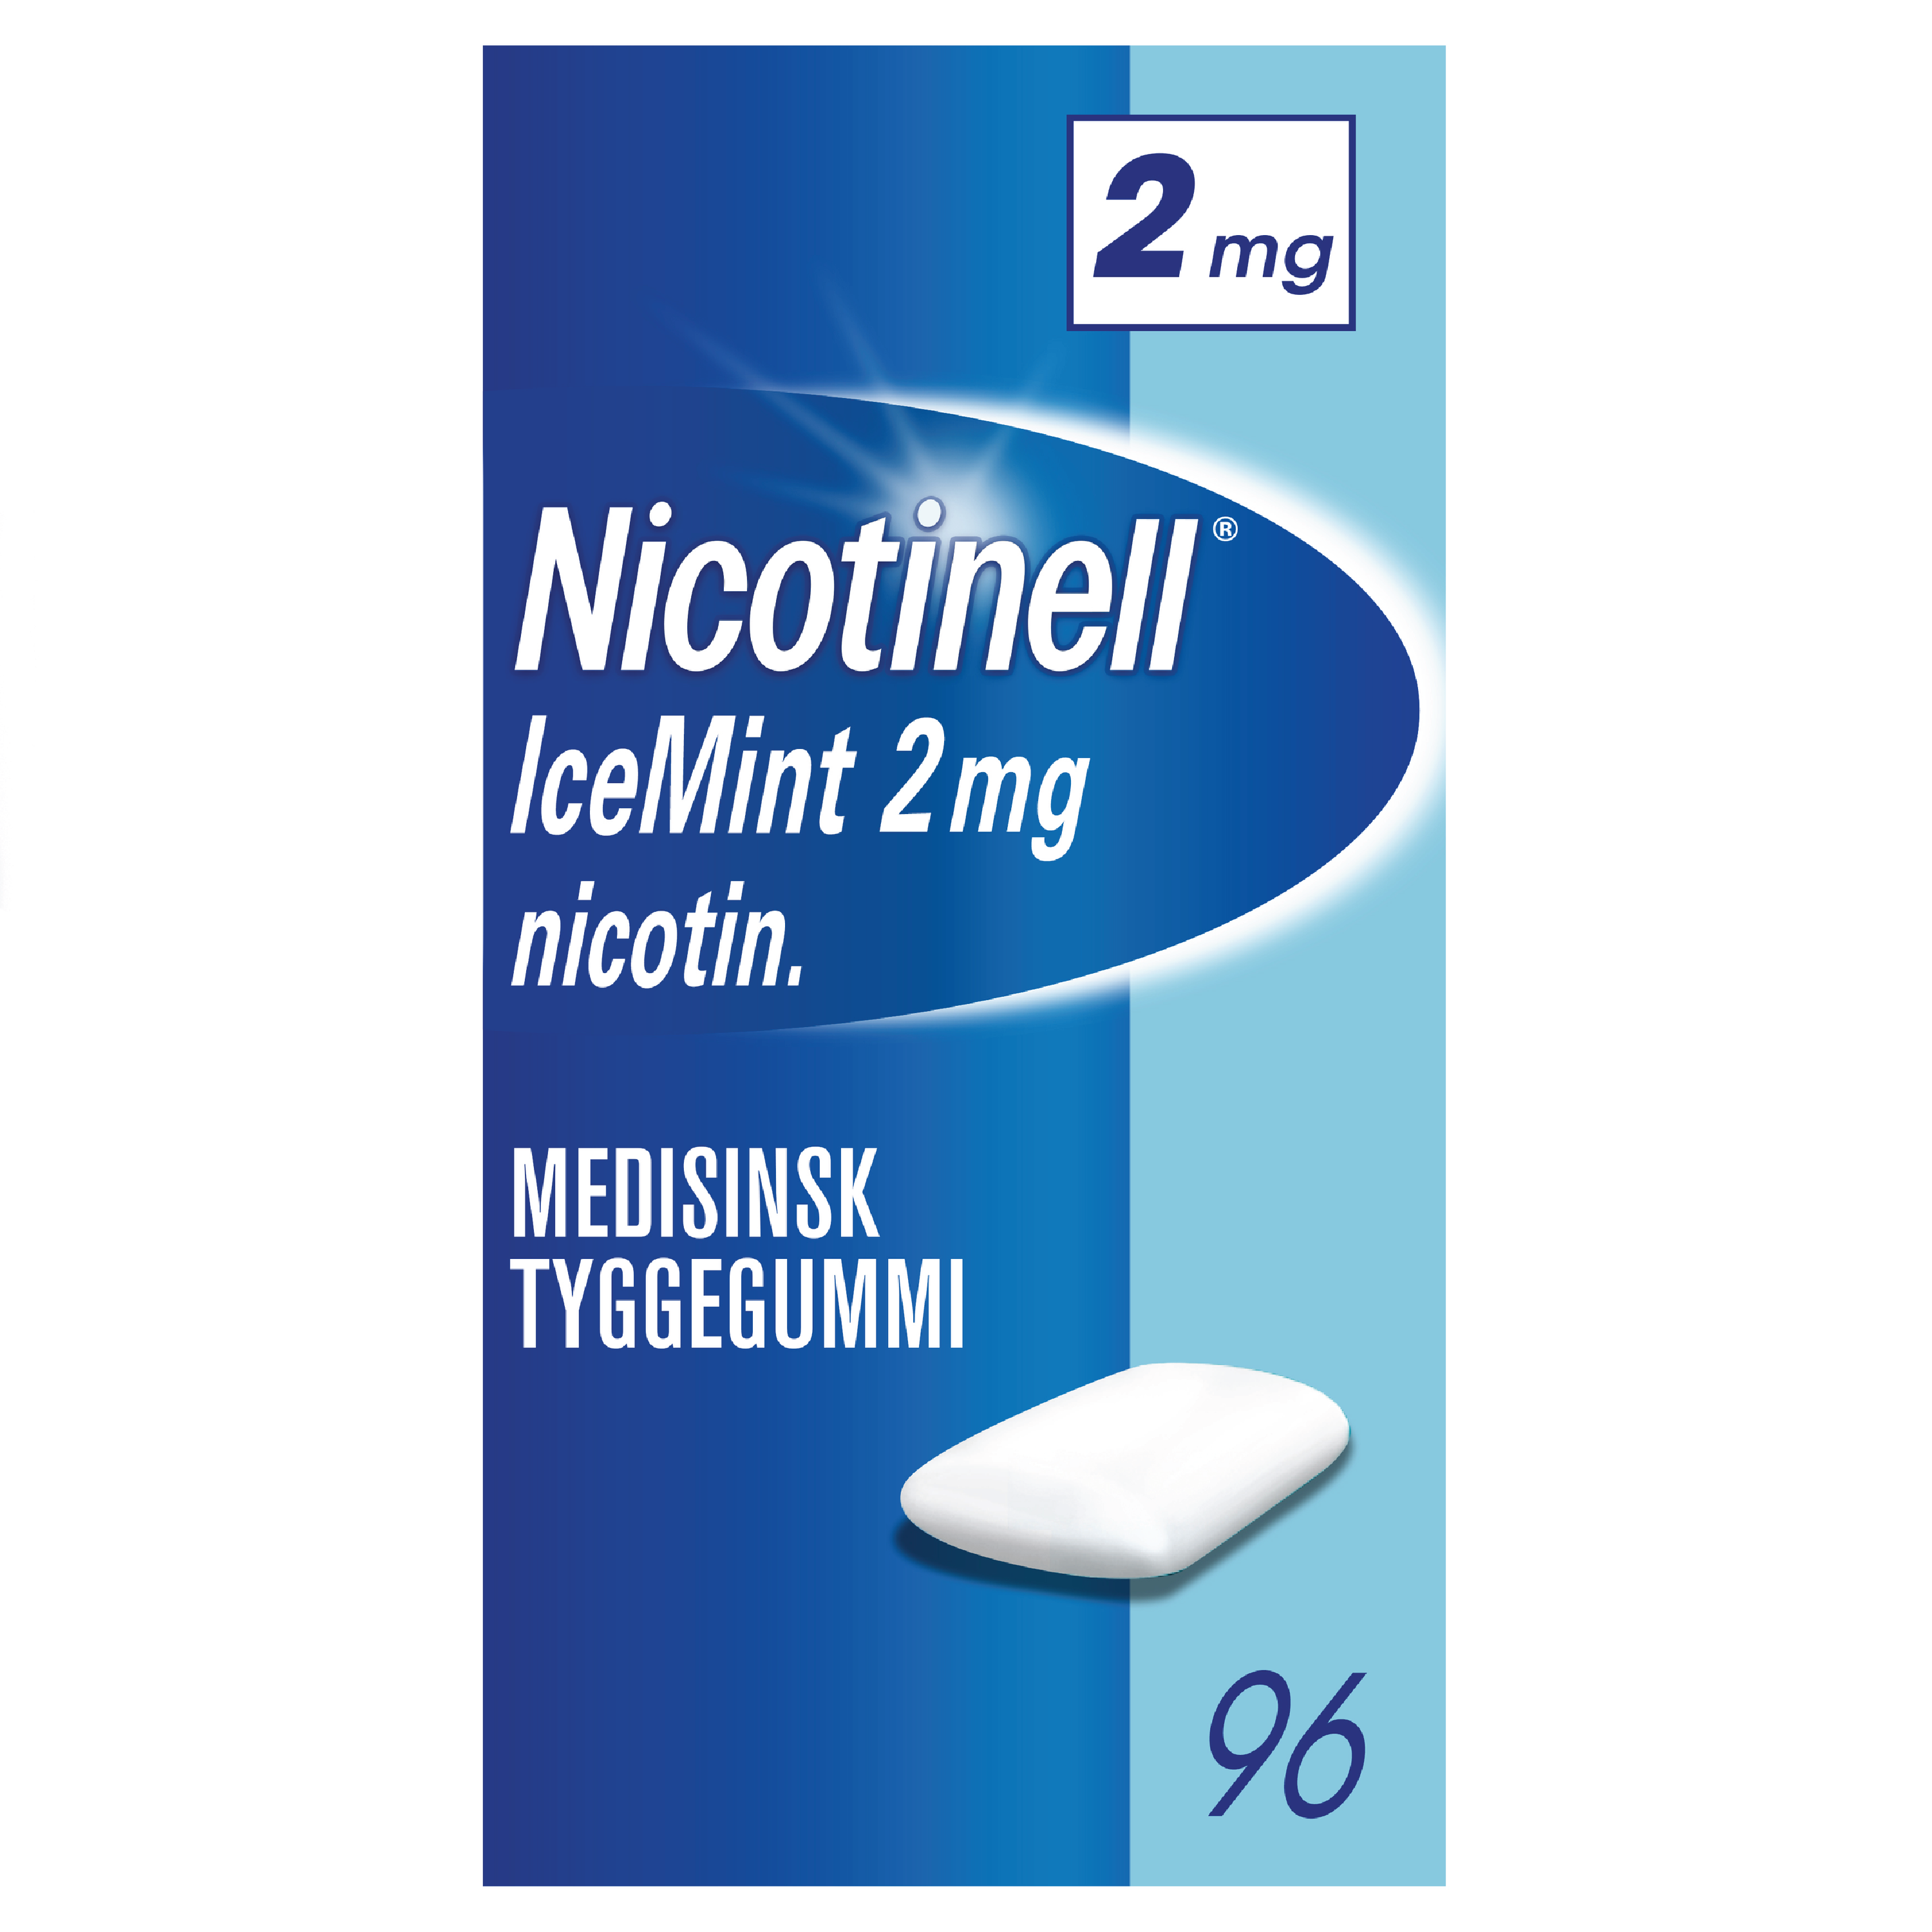 Nicotinell Tyggegummi 2mg icemint, 96 stk.